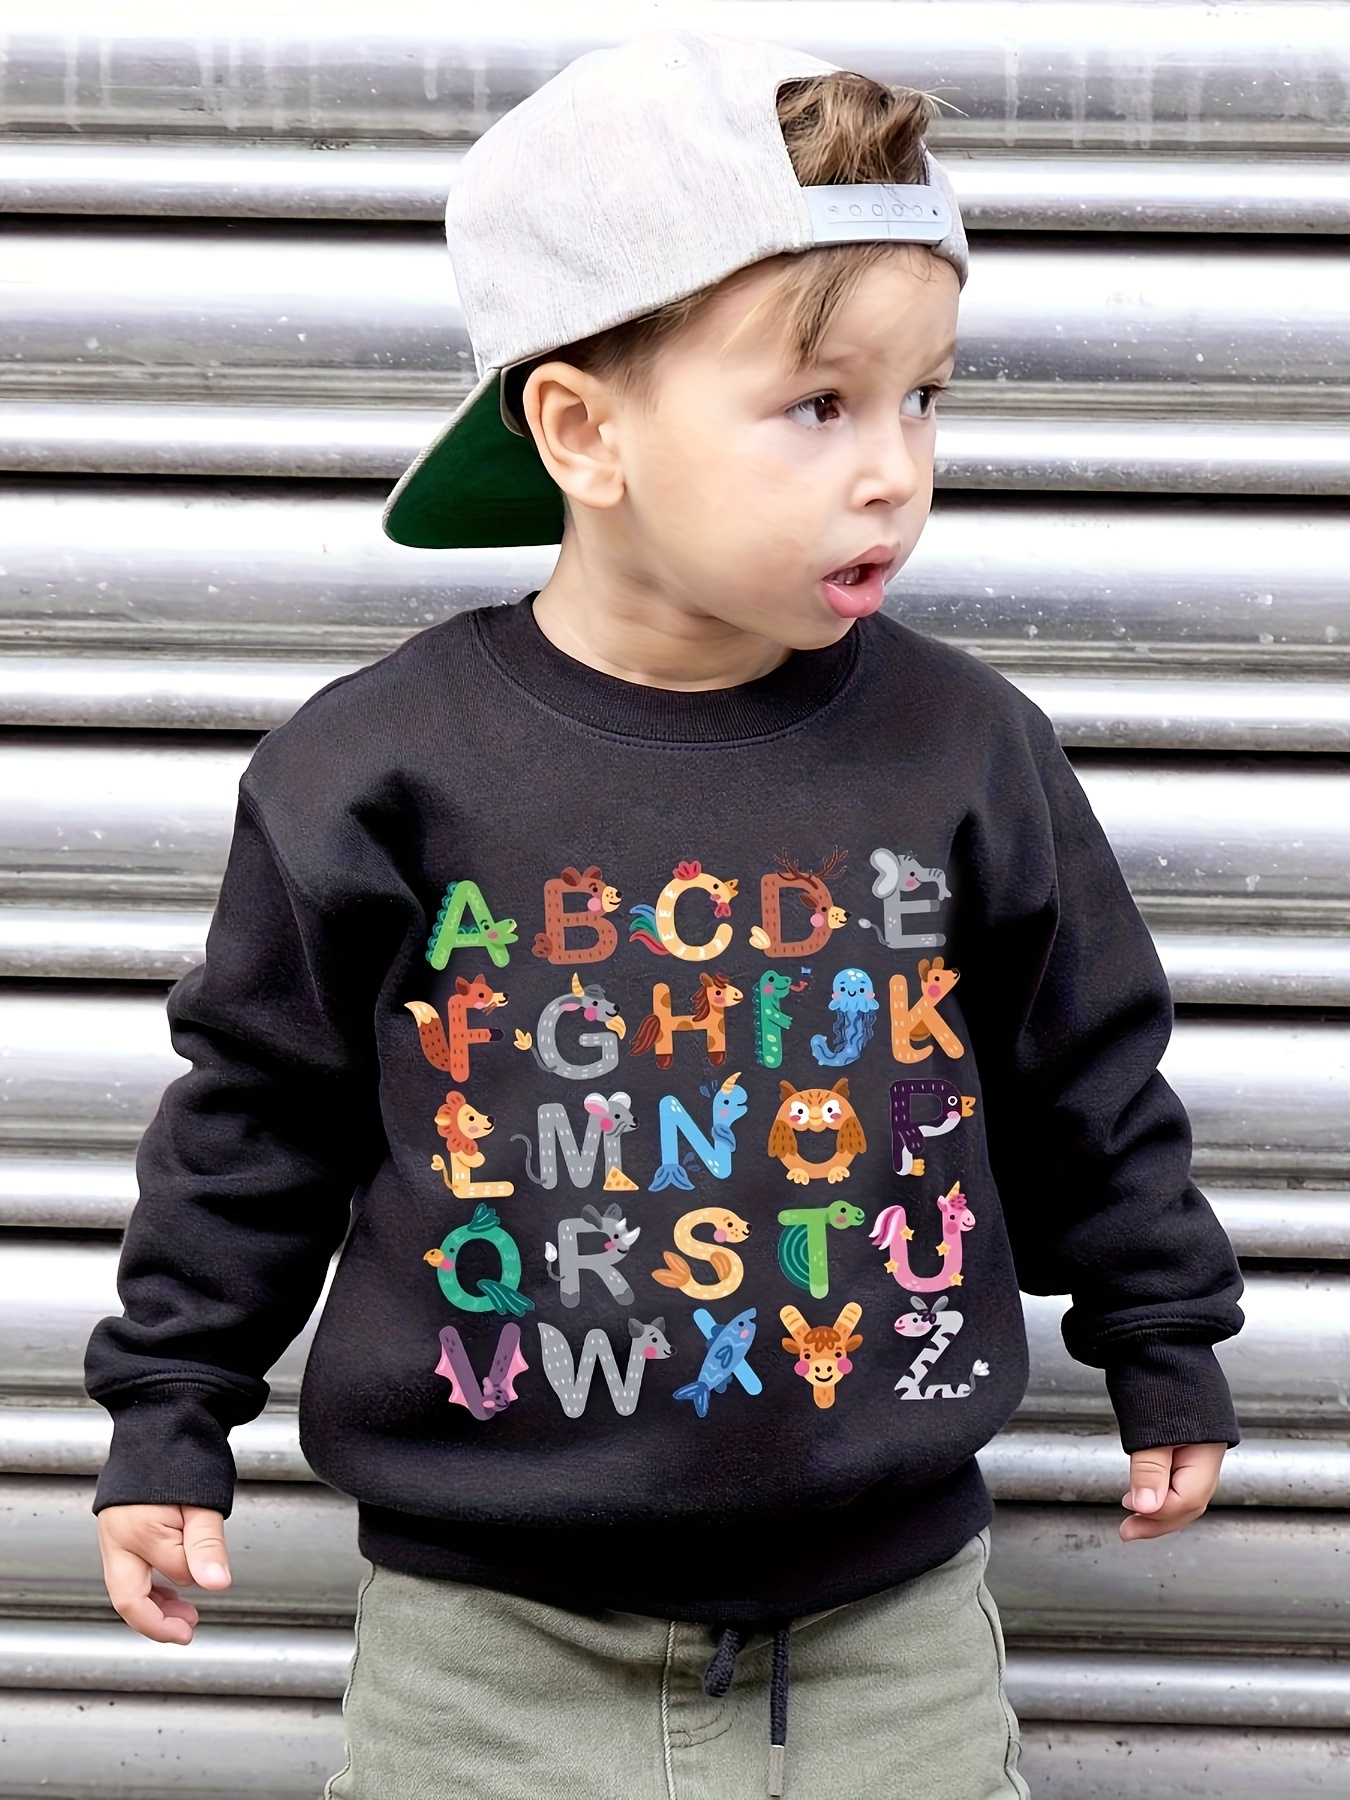 Autumn Disney Cars Girl Boy Sweatshirts Children Cartoons Kawaii Print  Hoodies Kid Pullover Casual Cotton Clothes Fashion Tops